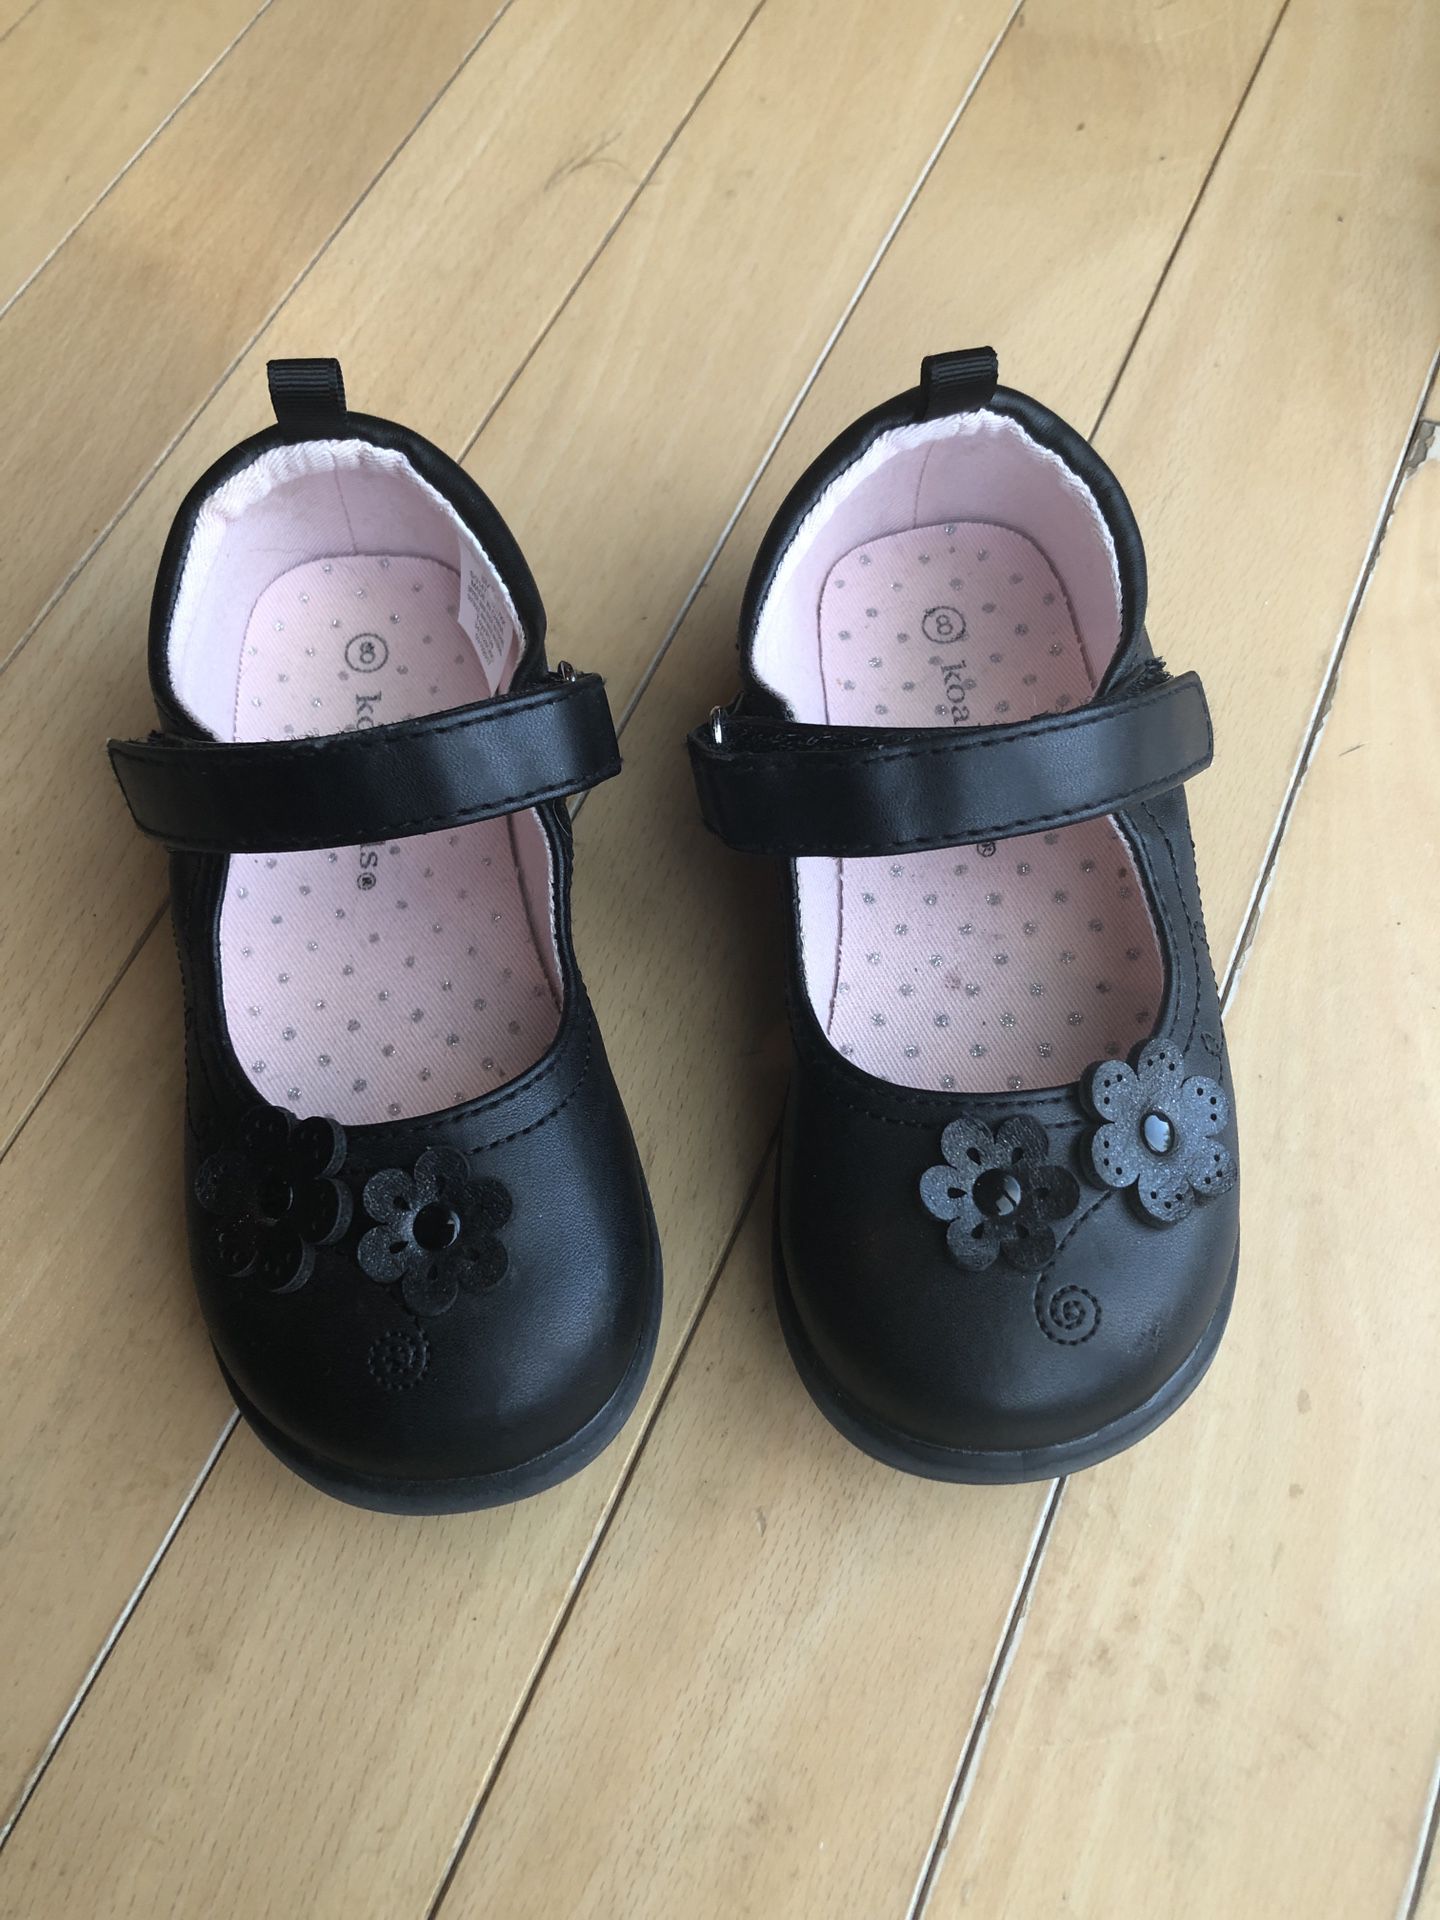 Little Girls Black Dress Shoes - size 8